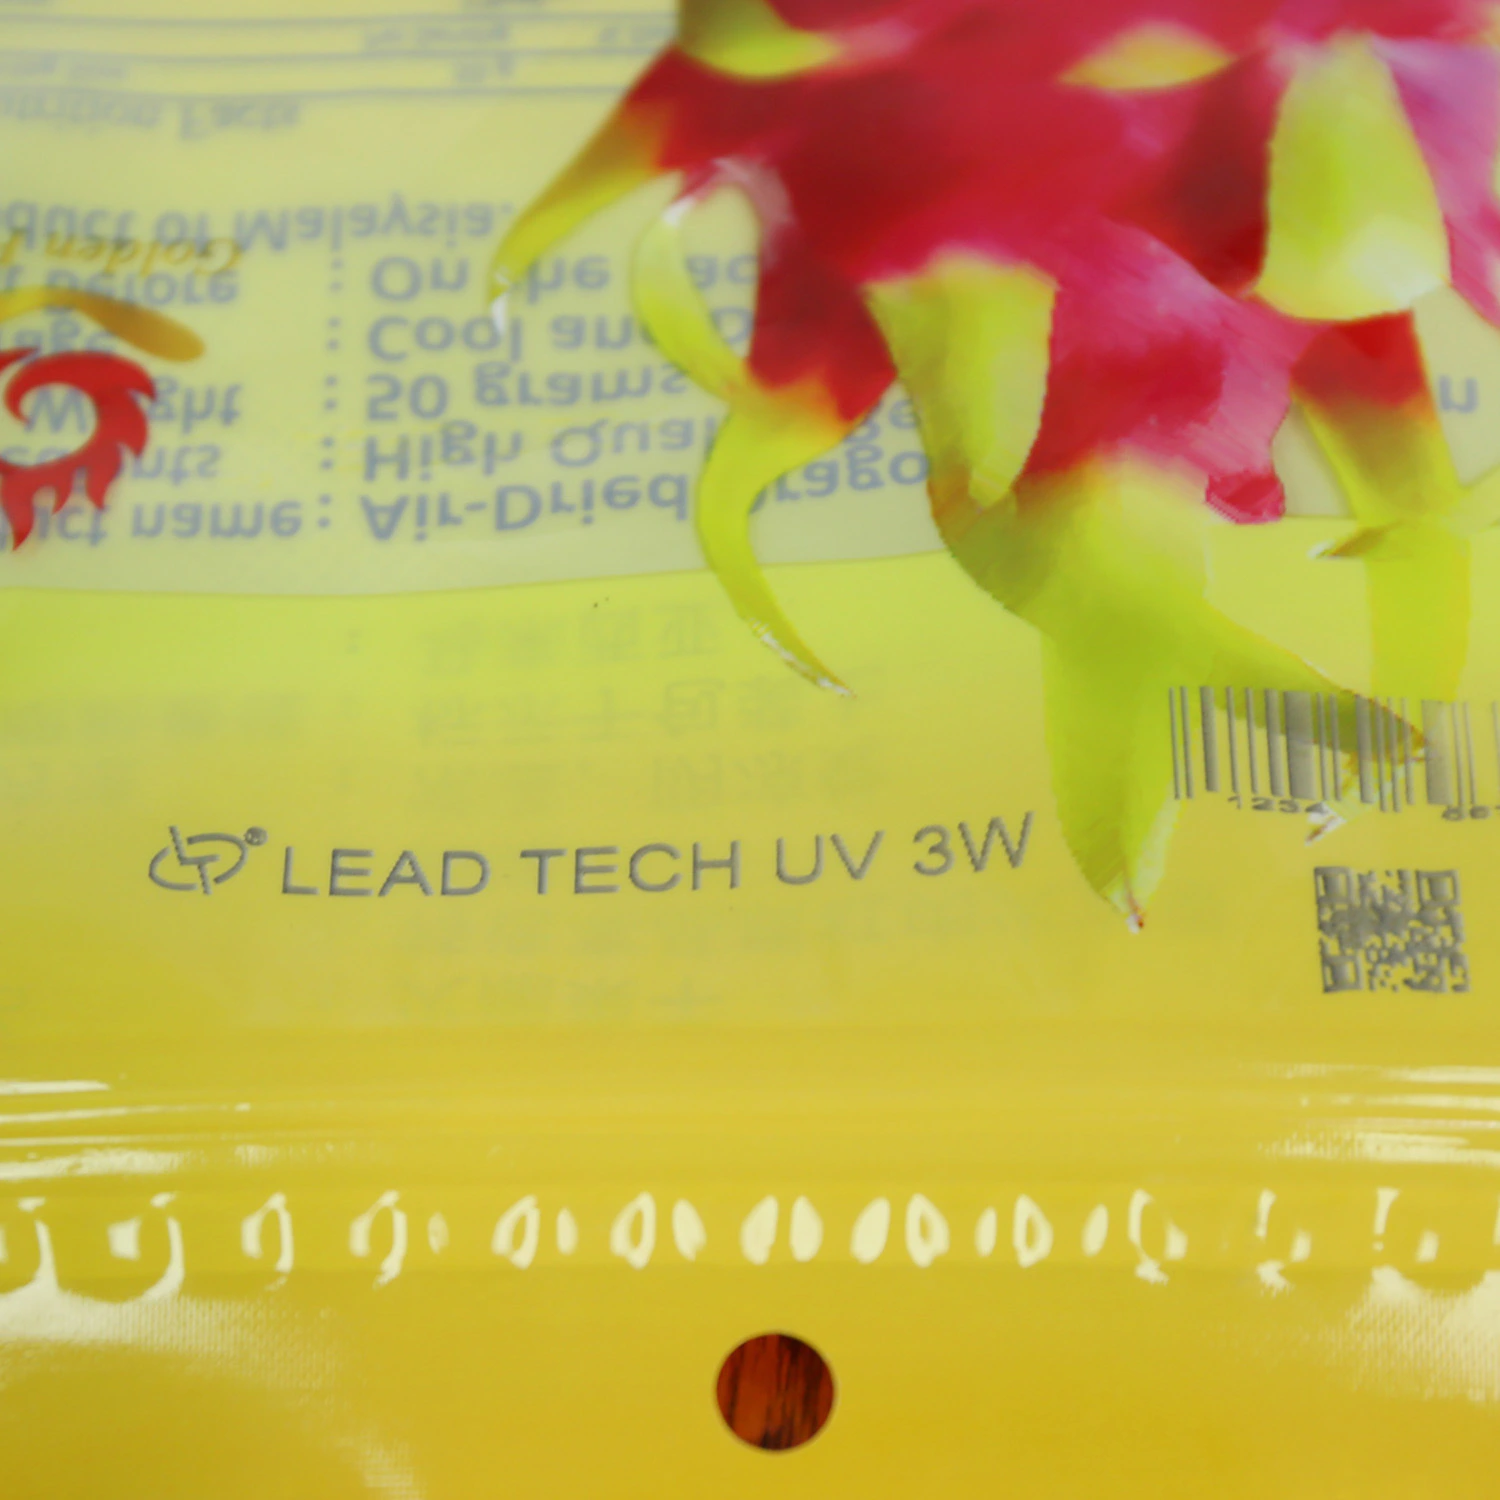 Lead Tech Lt8003u/Lt8005u UV 3W/5W High Precision Digital Laser Engraving Marking Printer for Pipe/Leather